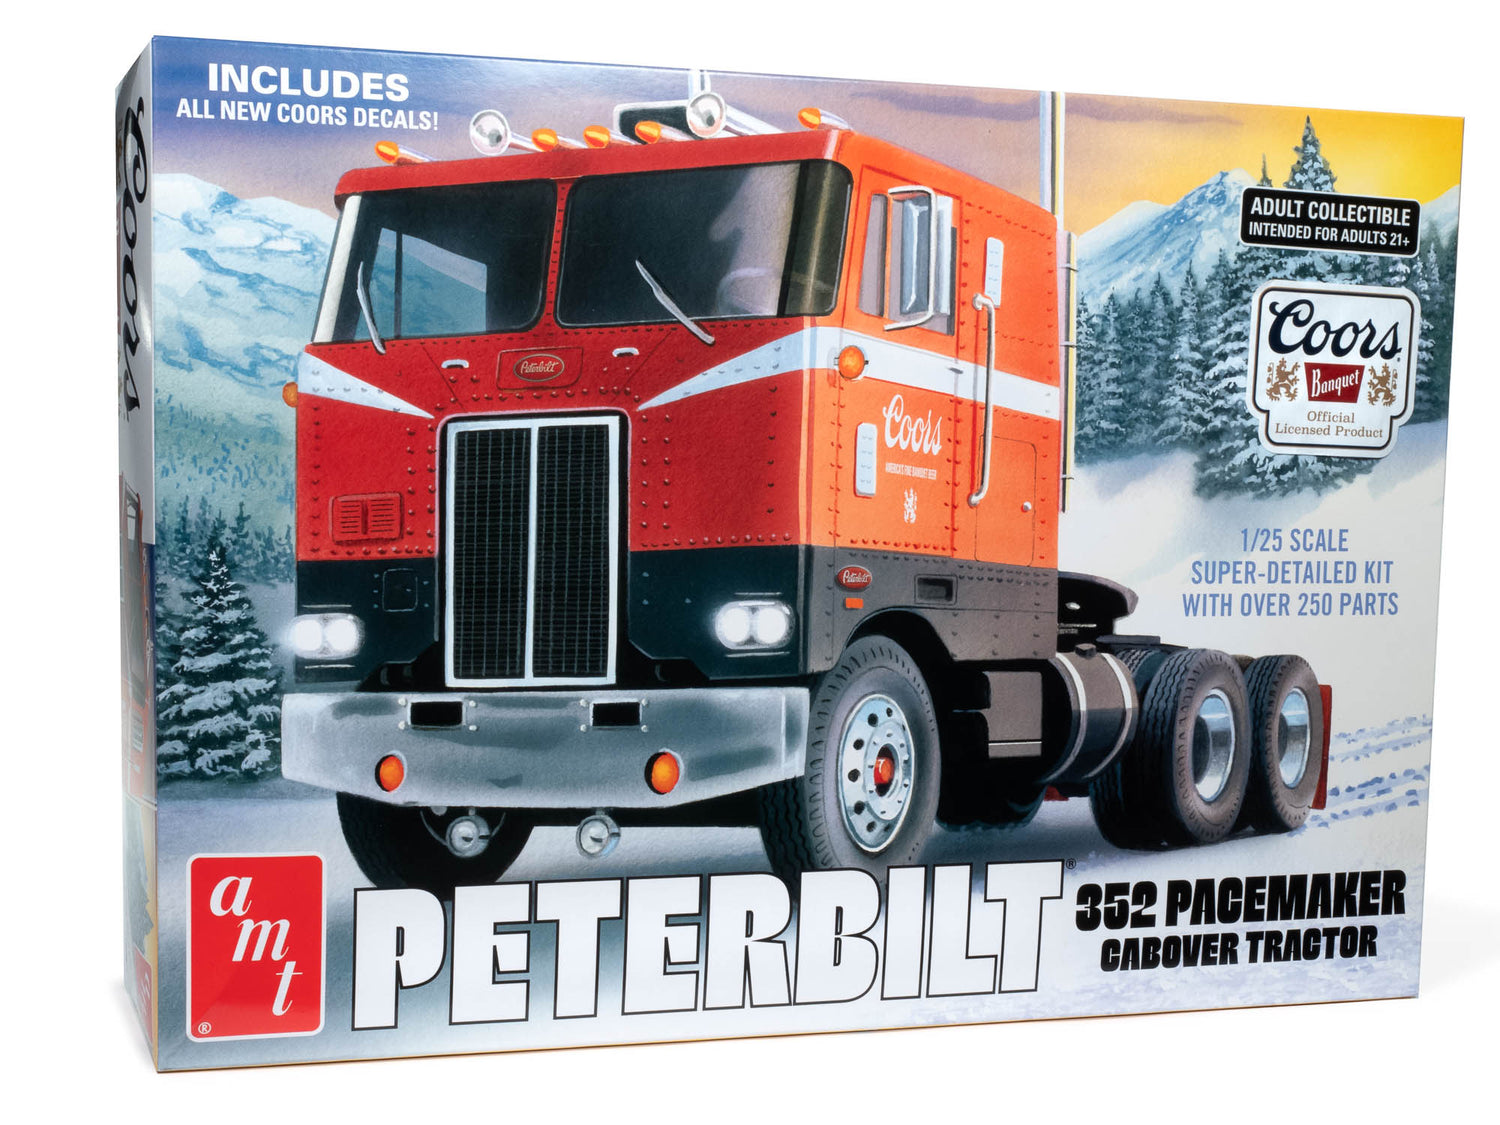 AMT Peterbilt 352 Pacemaker COE Coors Beer 1:25 Scale Model Kit